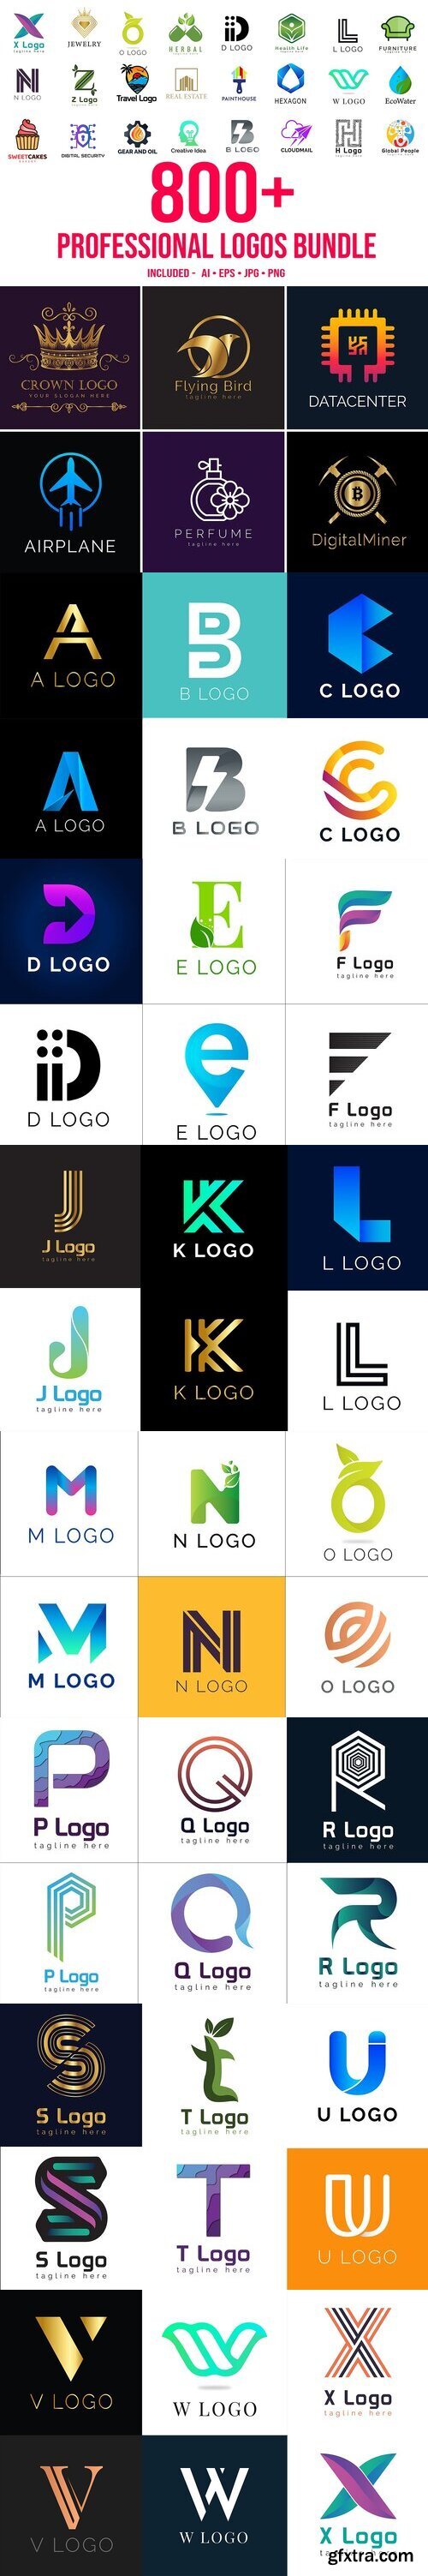 CreativeMarket - 800+ Professional Logos Bundle 6294374